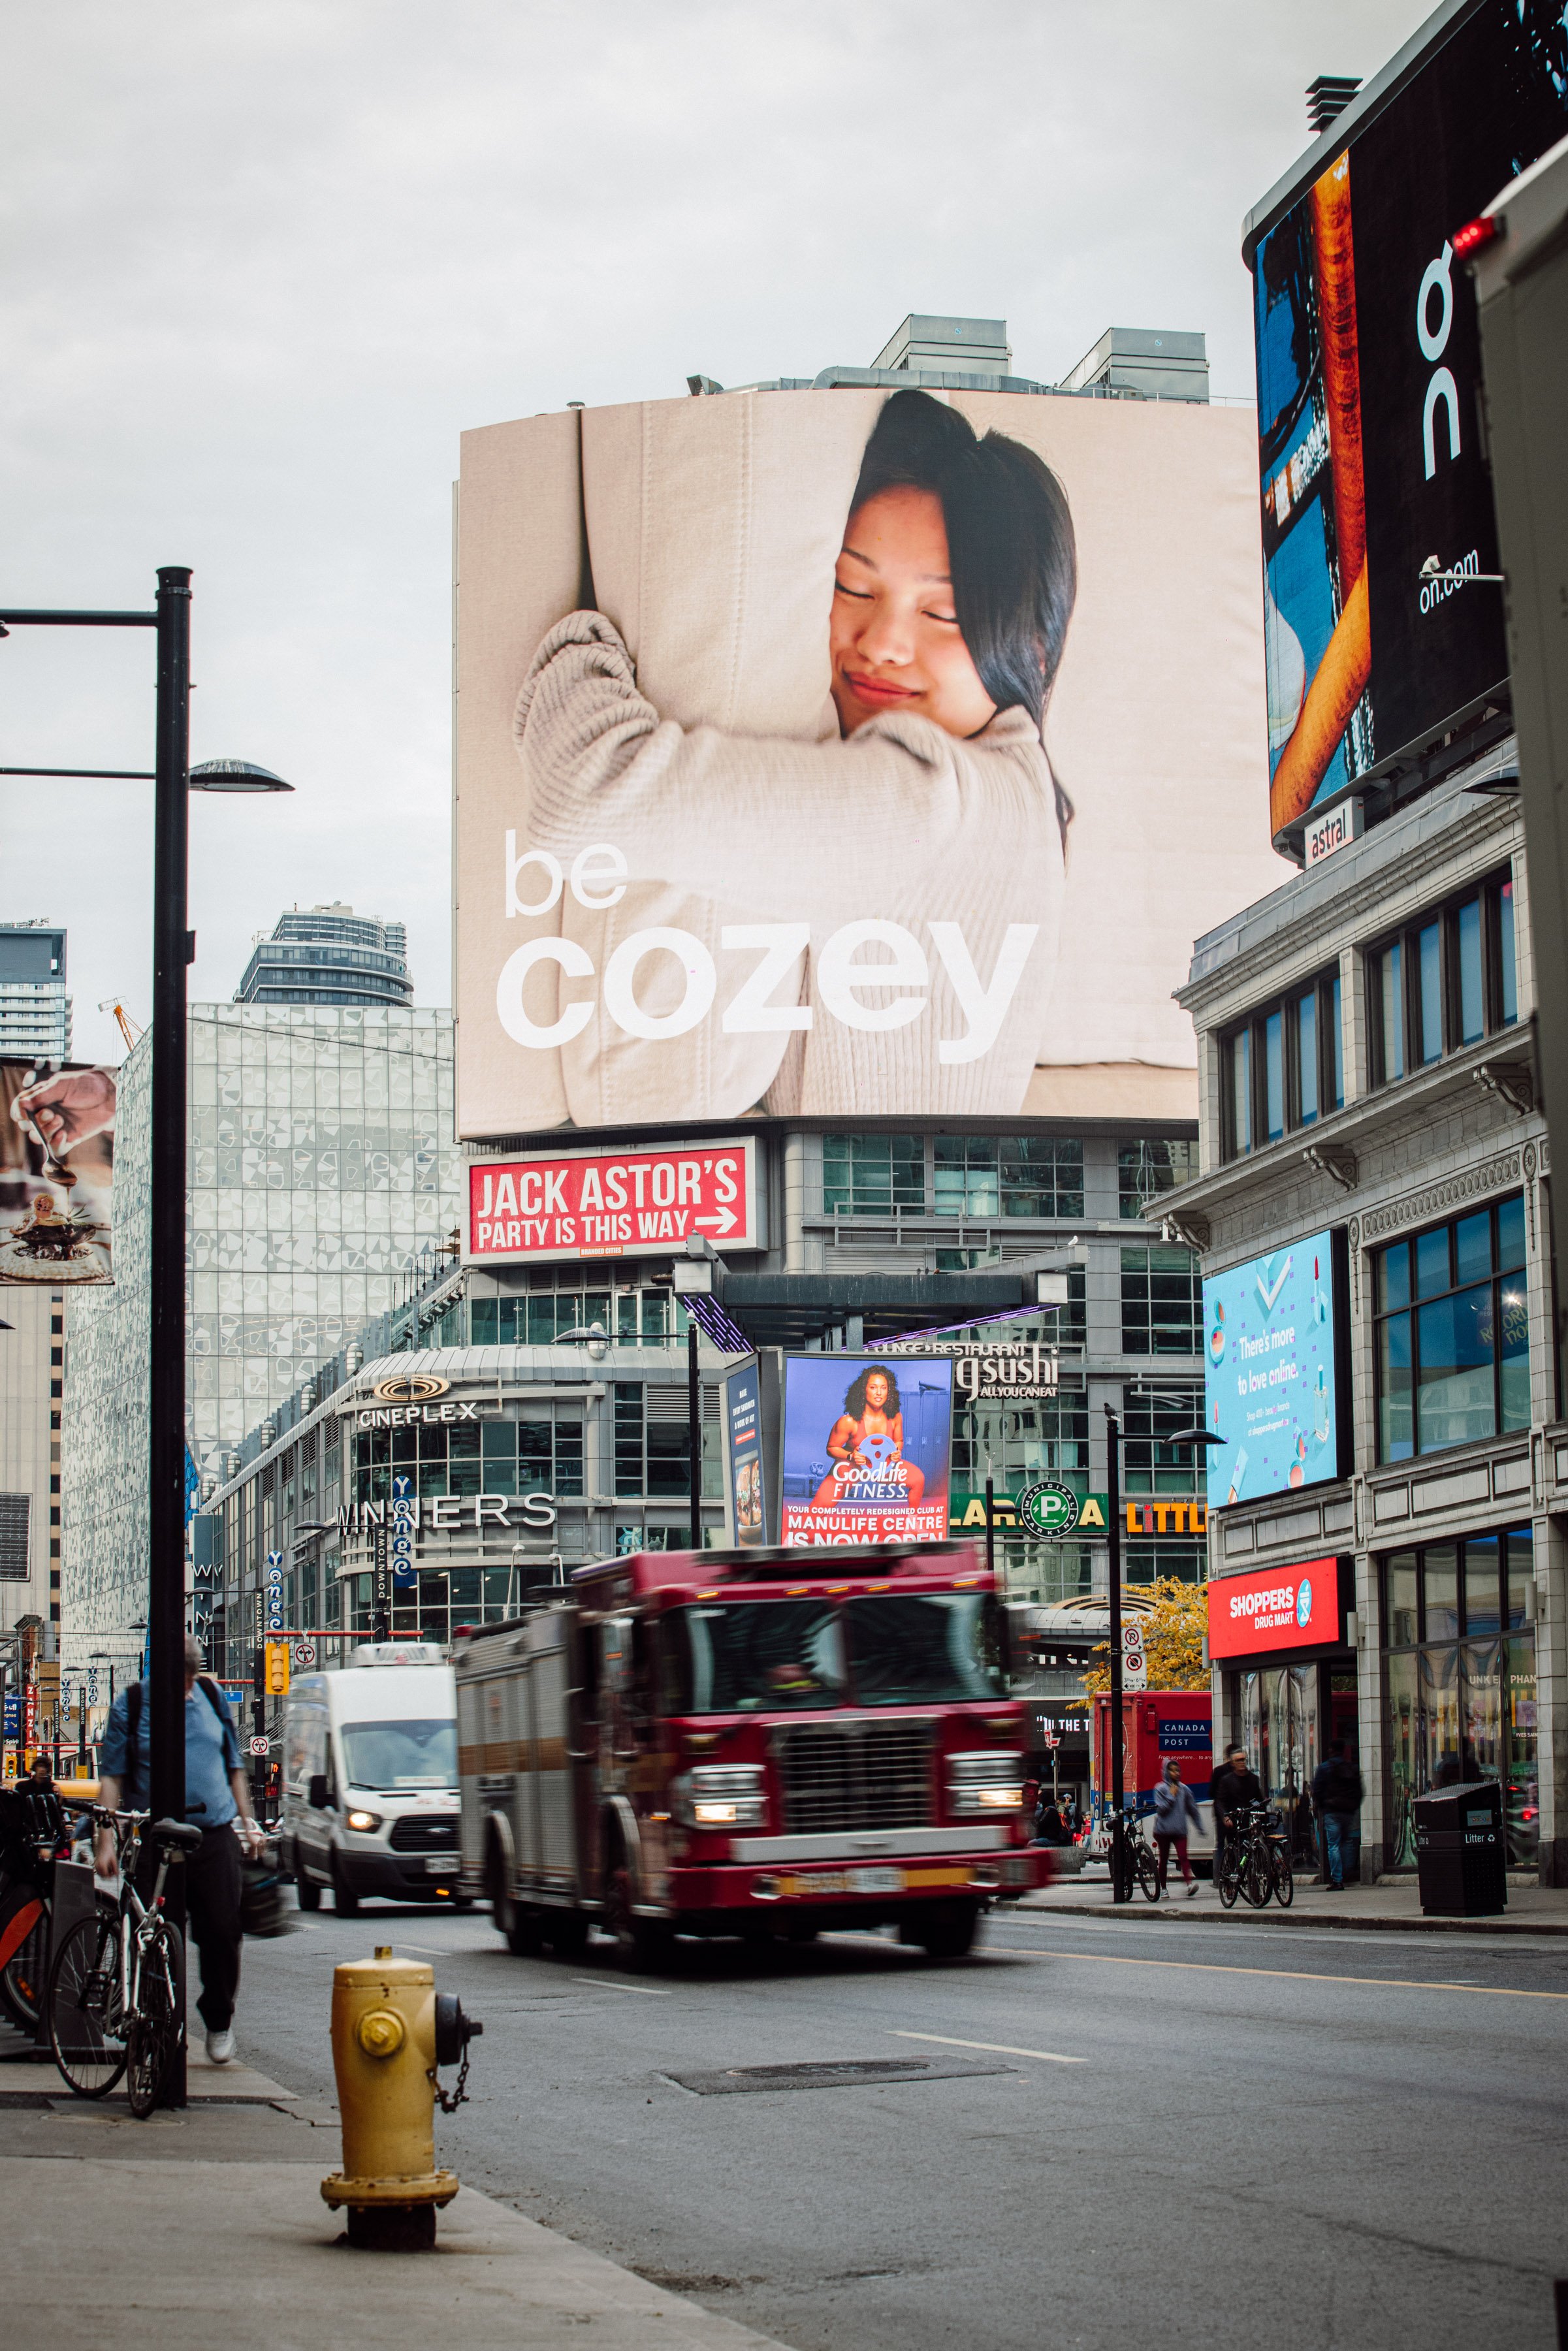 Cozey_BillboardV2-21.jpg